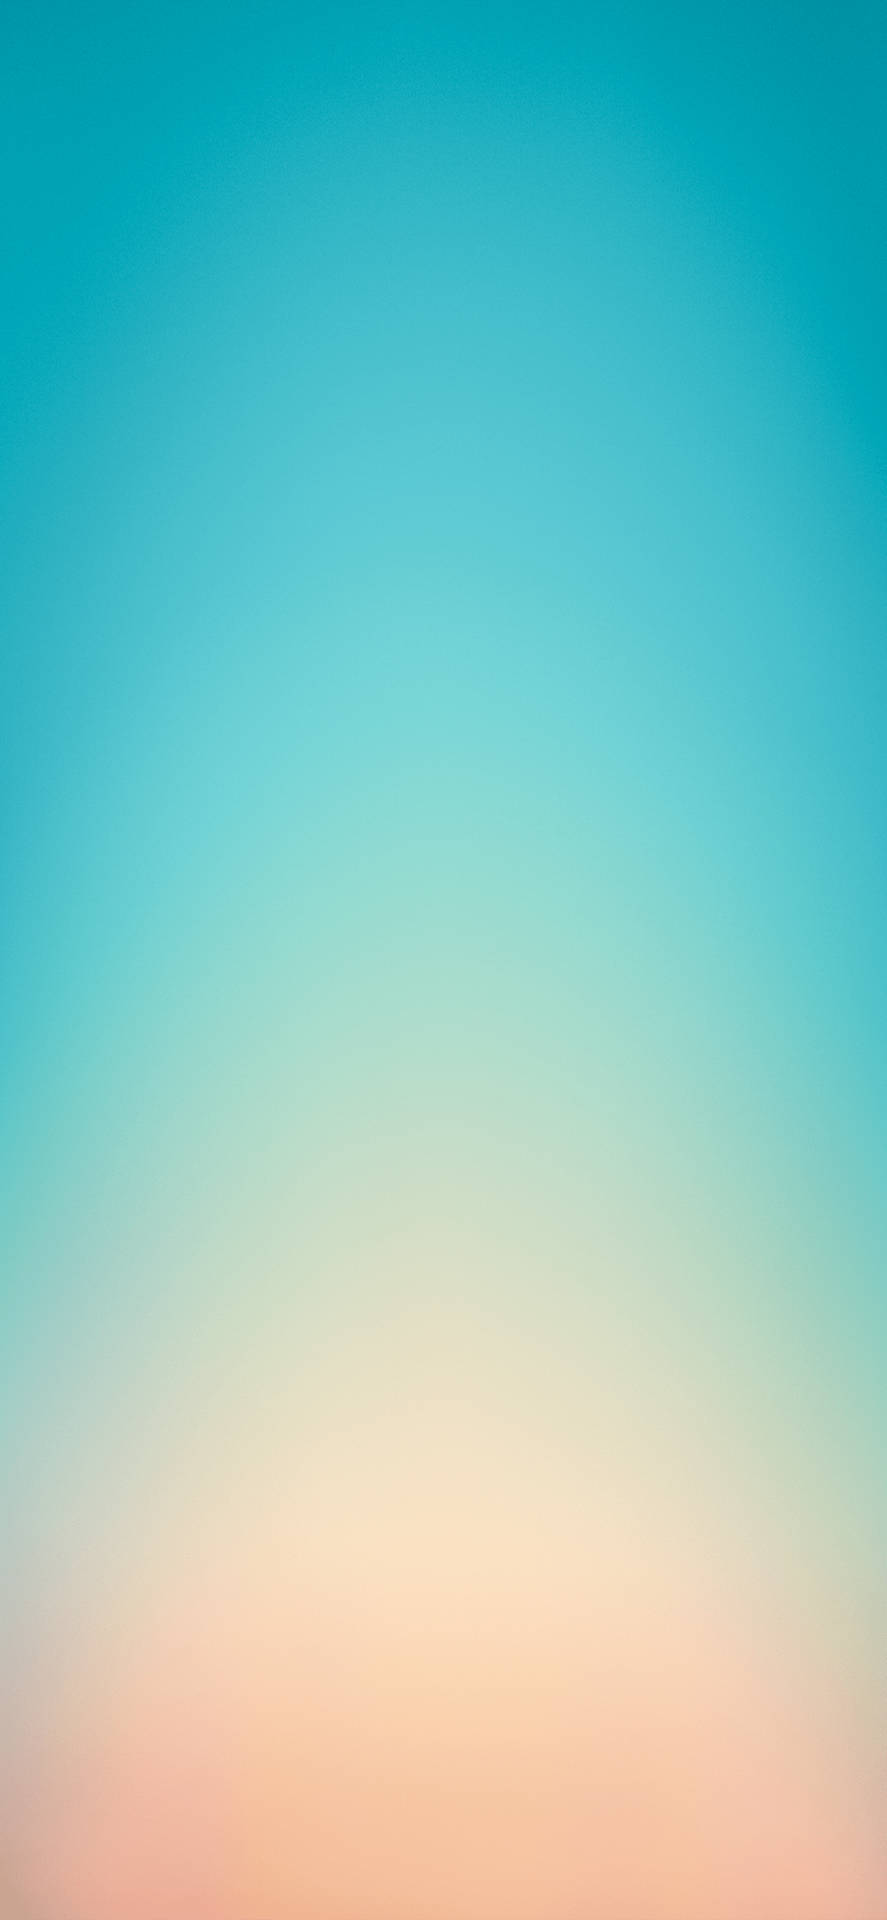 Apple Iphone Default Blue Orange Gradient Background